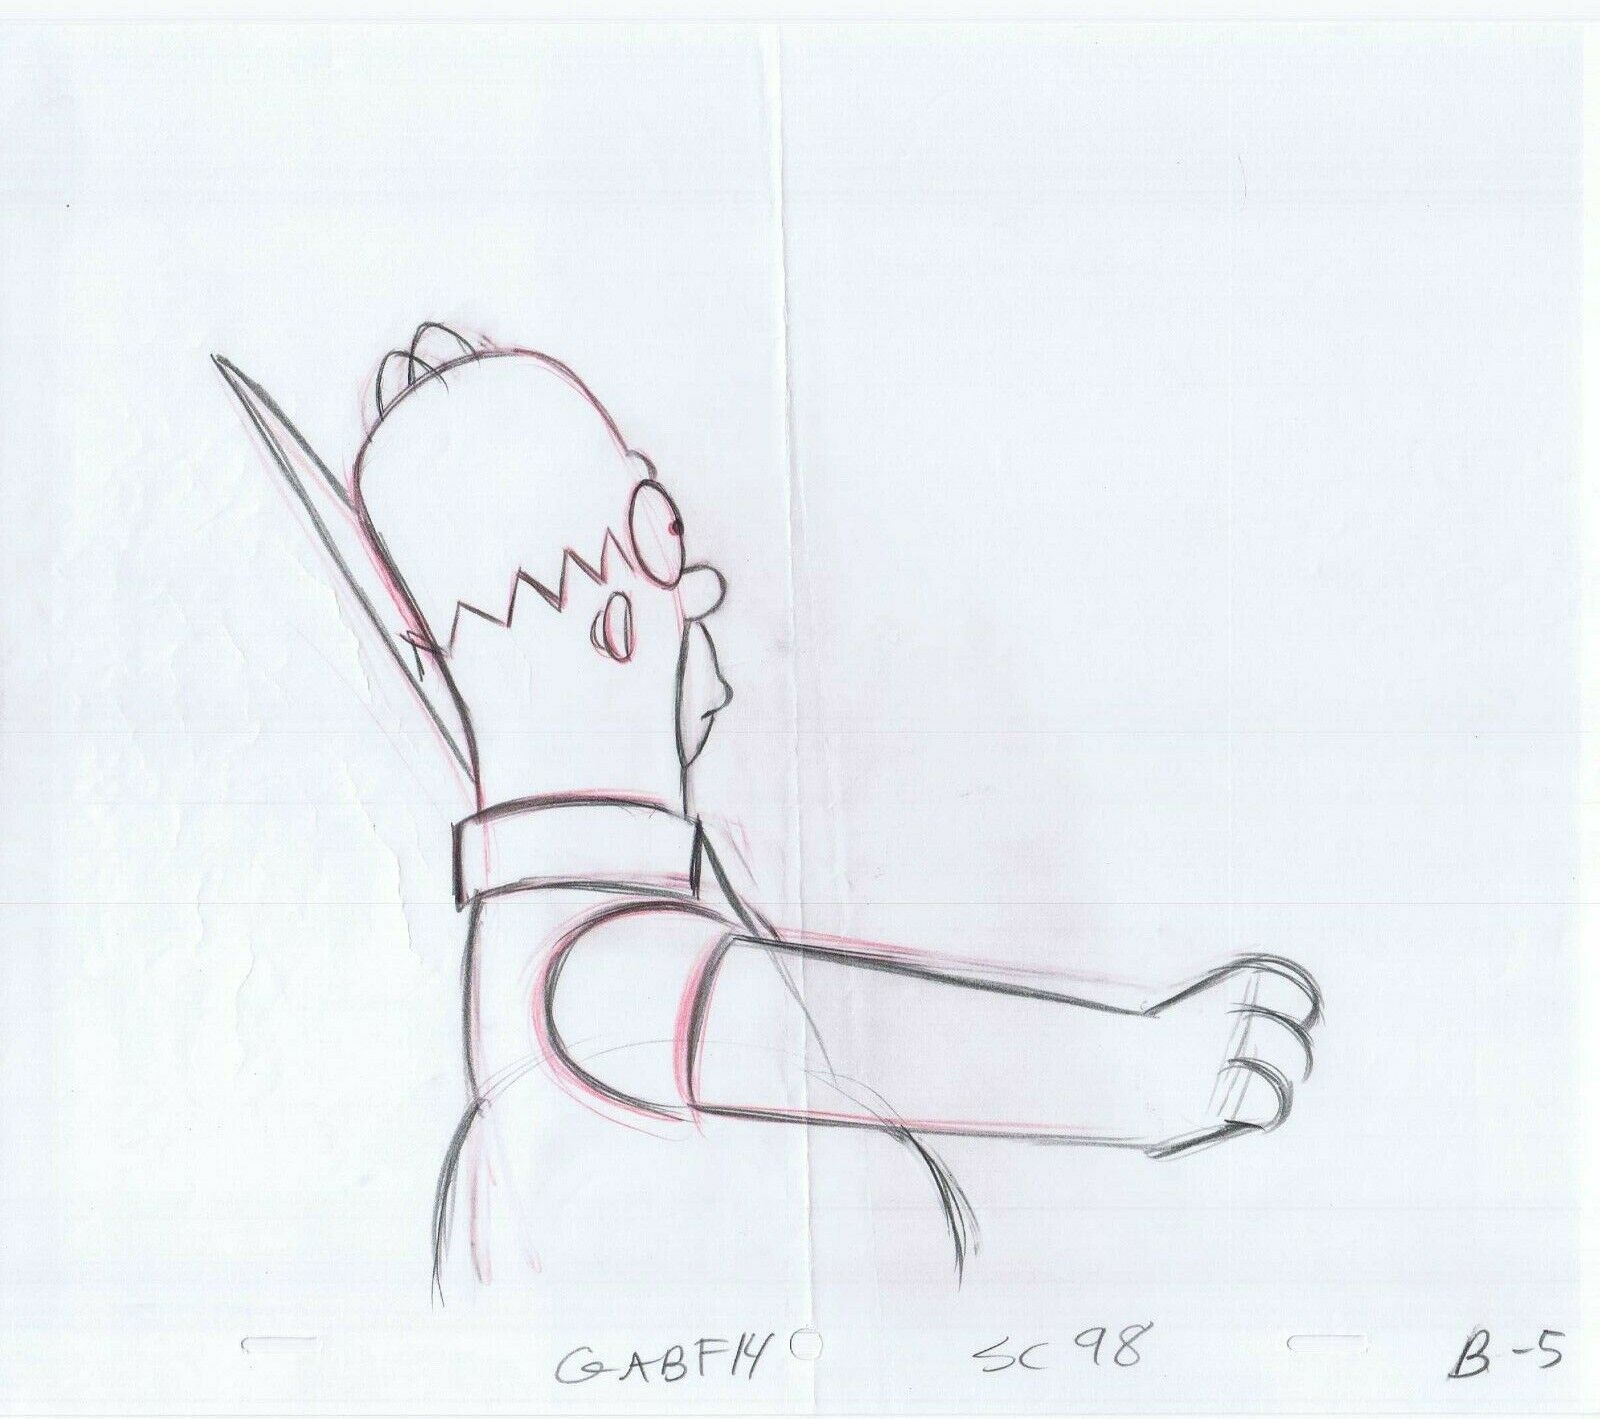 Simpsons Homer Original Art Animation Production Pencils GABF14 SC-98 B-5